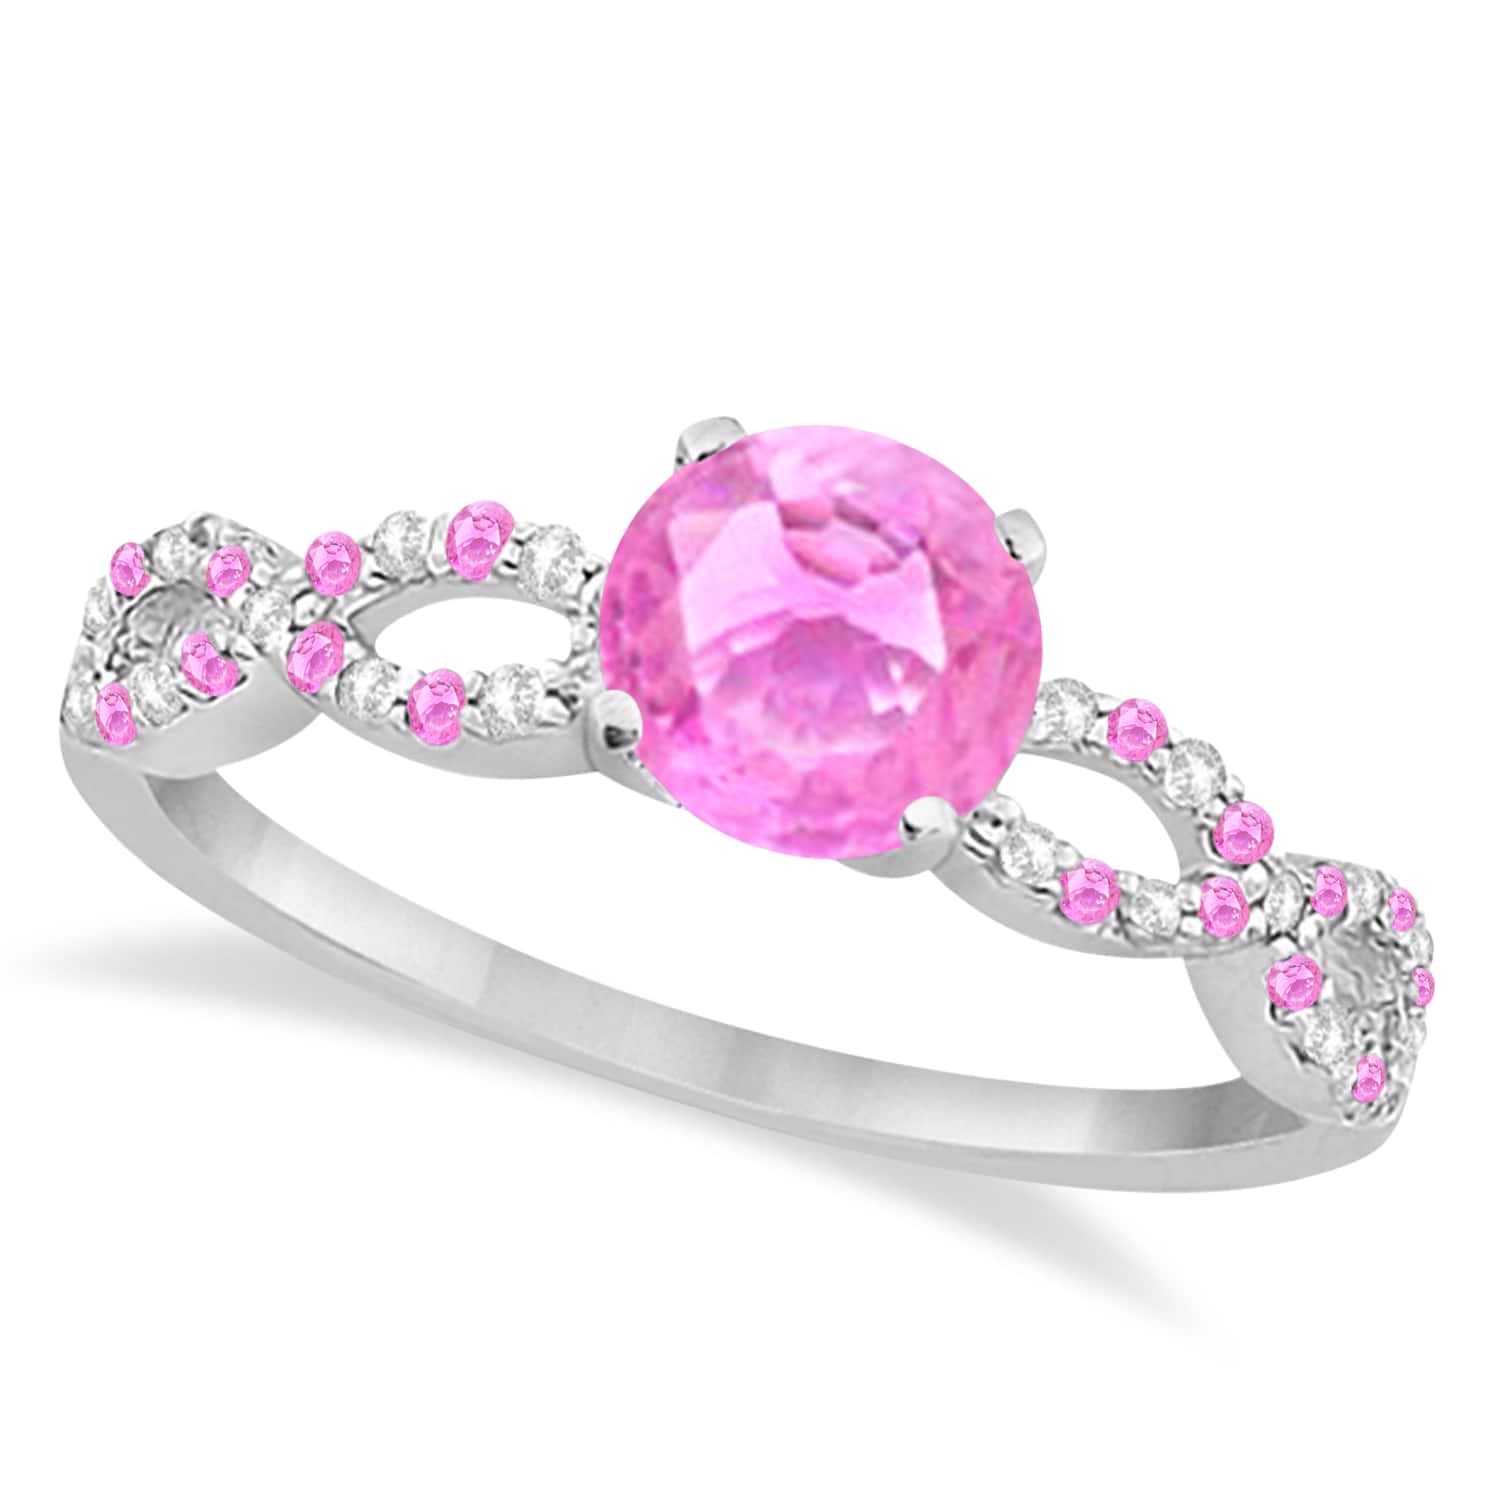 Infinity Diamond & Pink Sapphire Engagement Ring 14K White Gold 1.05ct